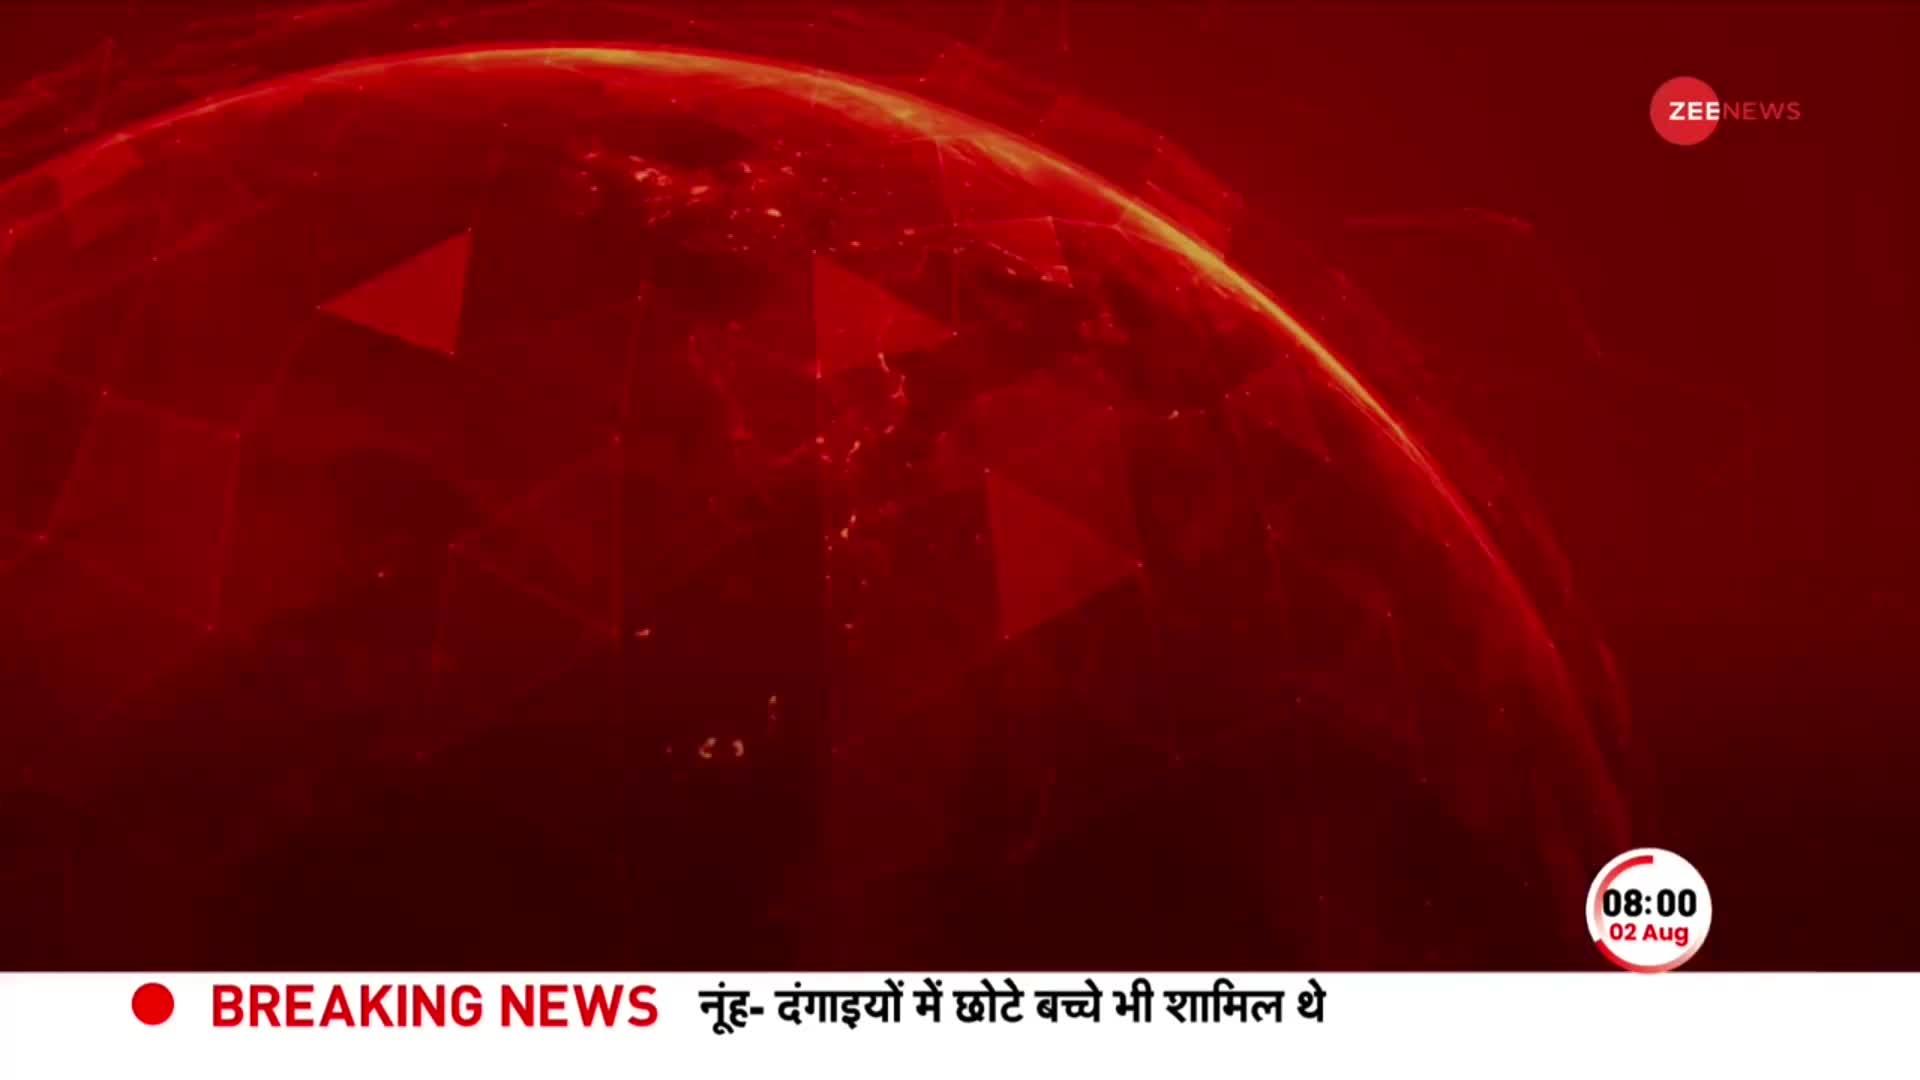 Nuh Violence Update LIVE: Haryana Hinsa पर एक्शन में Amit Shah, CM Manohar Lal Khattar से ली जानकारी